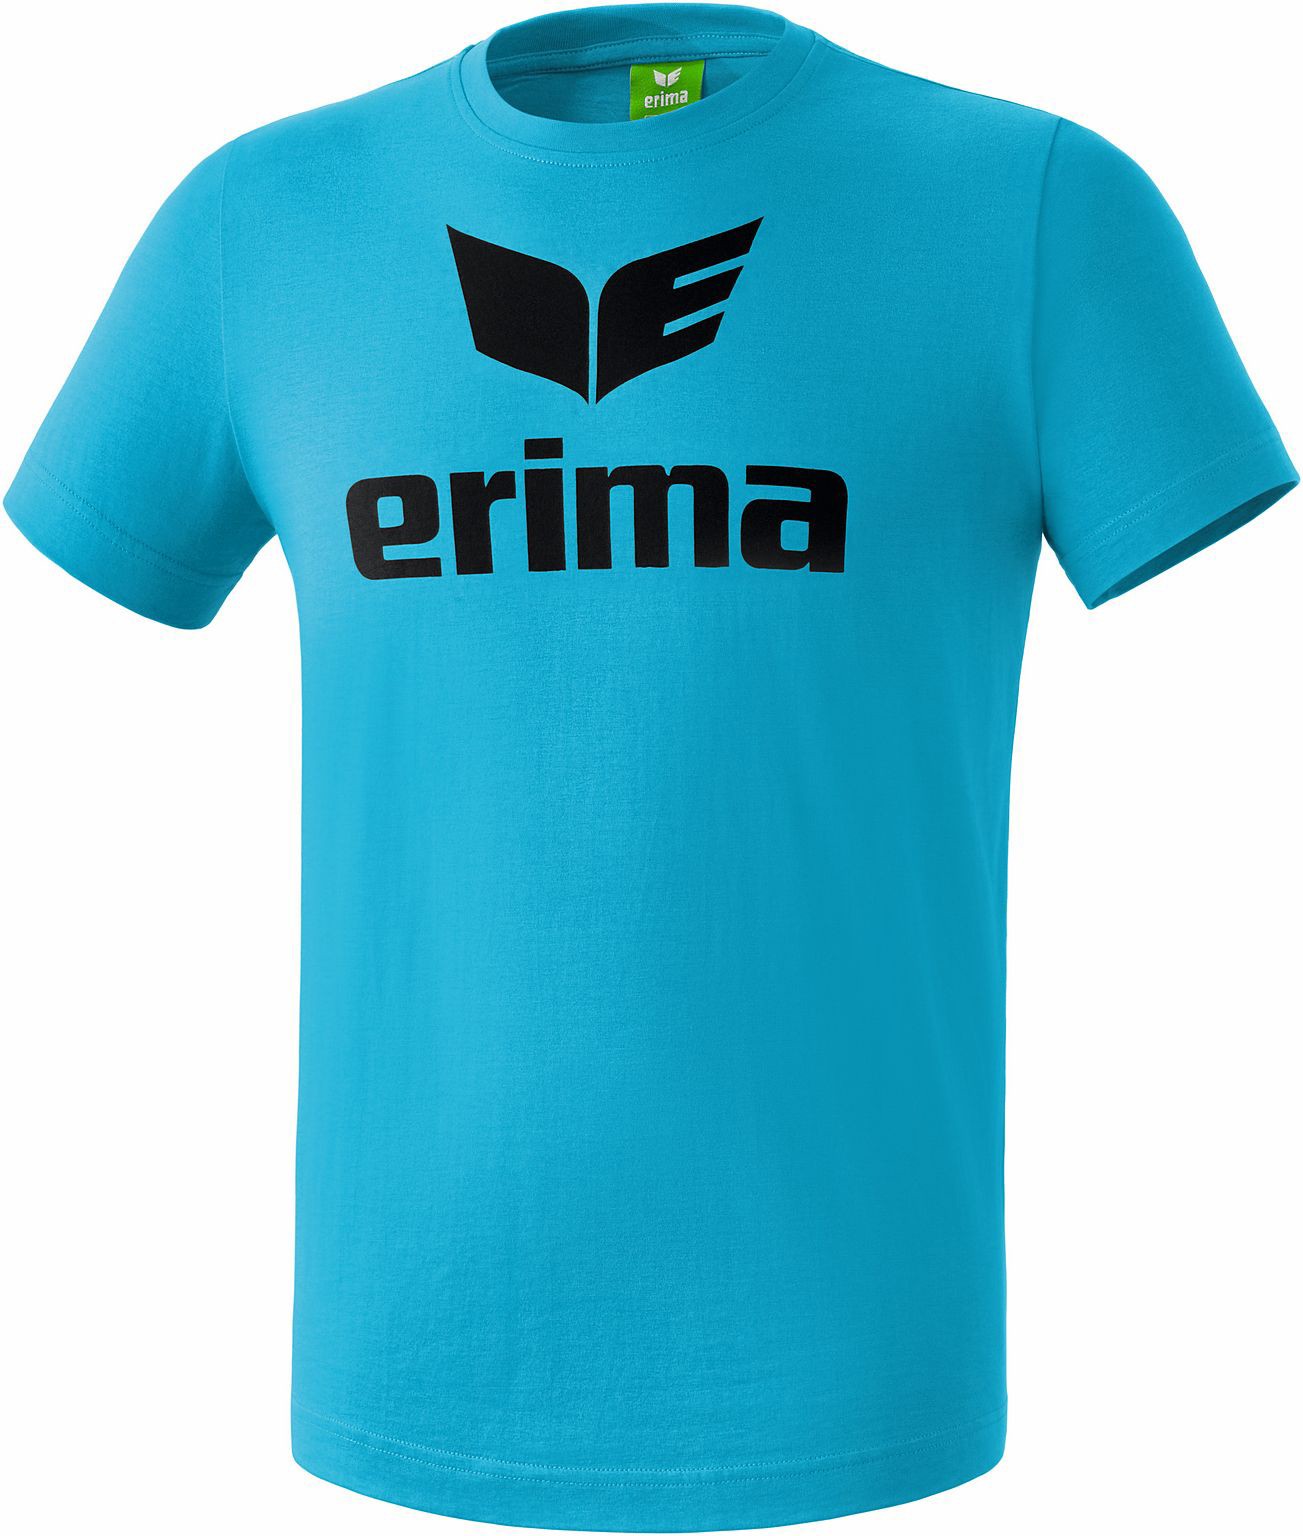 Erima Promo T-Shirt